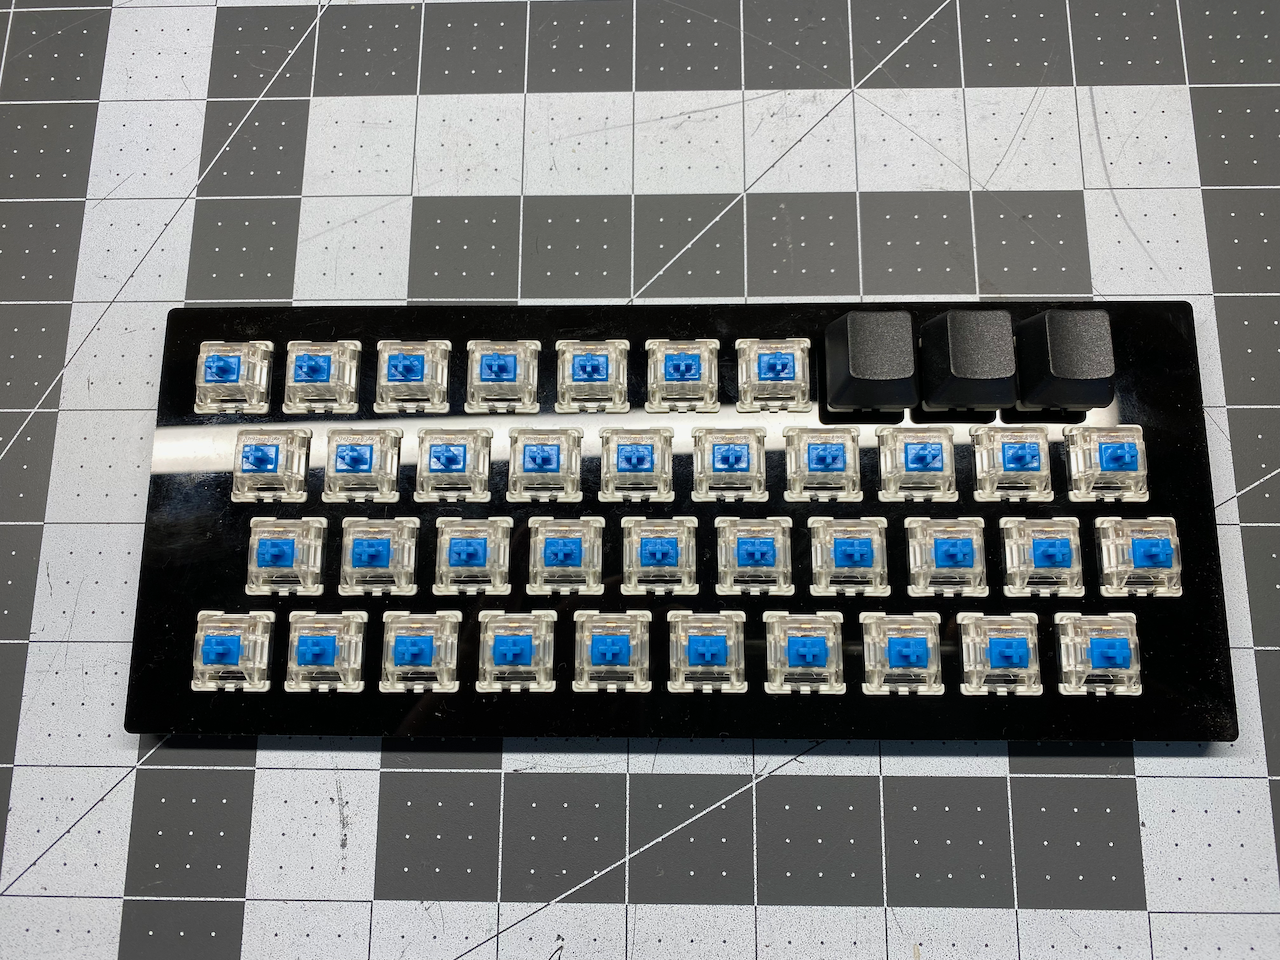 ZX81/TIMEX-SINCLAIR 1000 Custom Mechanical Keyboard Prototype - Part 1